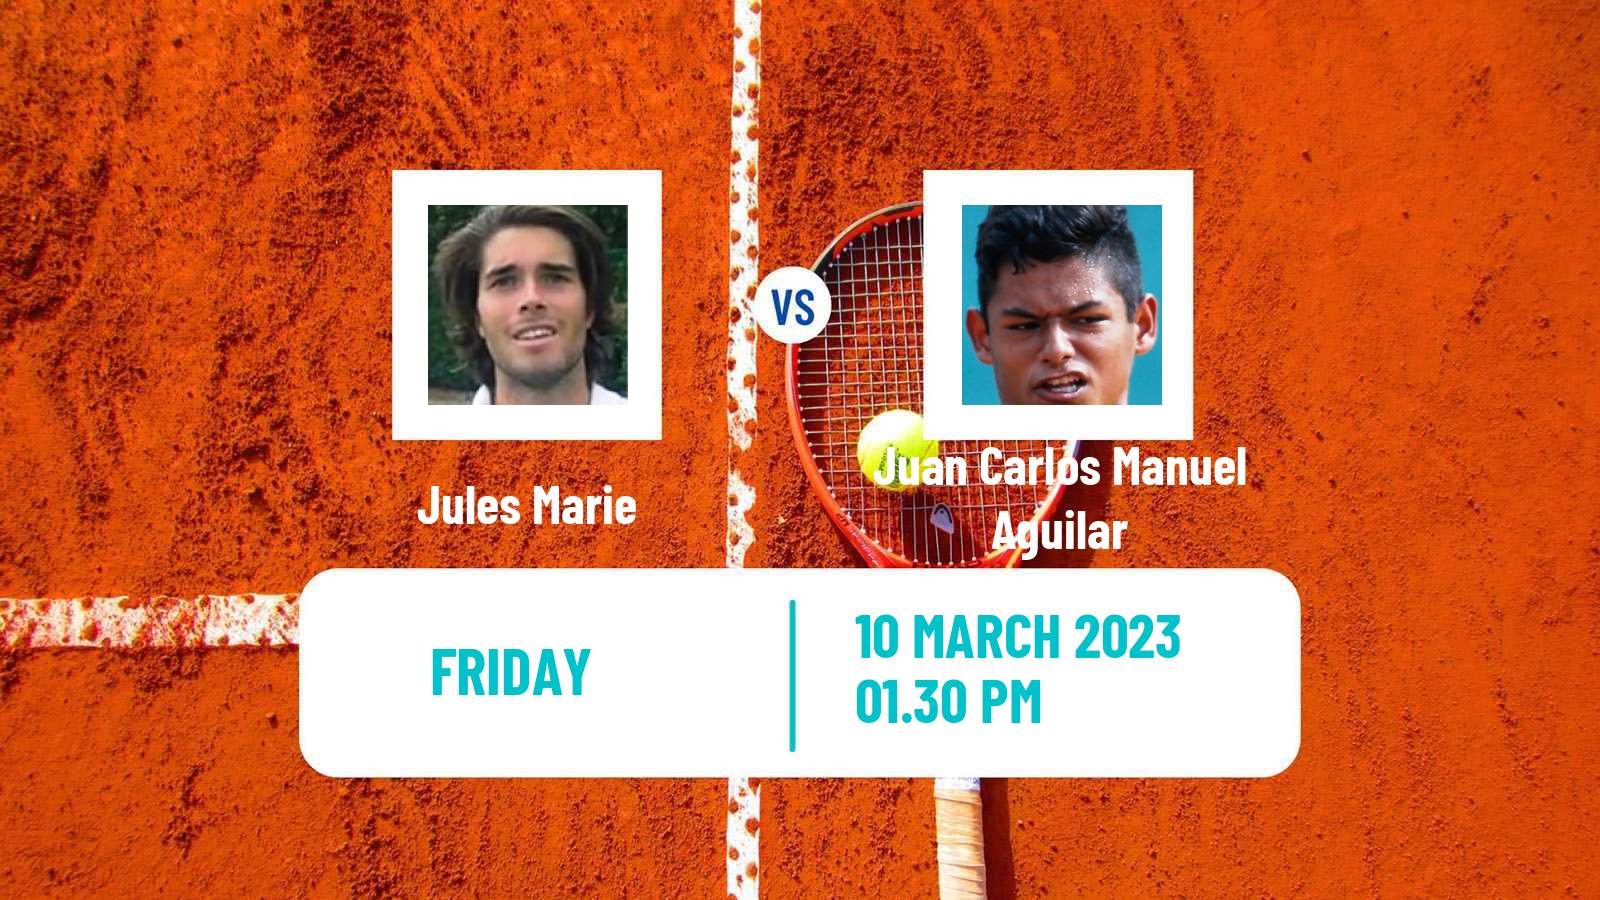 Tennis ITF Tournaments Jules Marie - Juan Carlos Manuel Aguilar